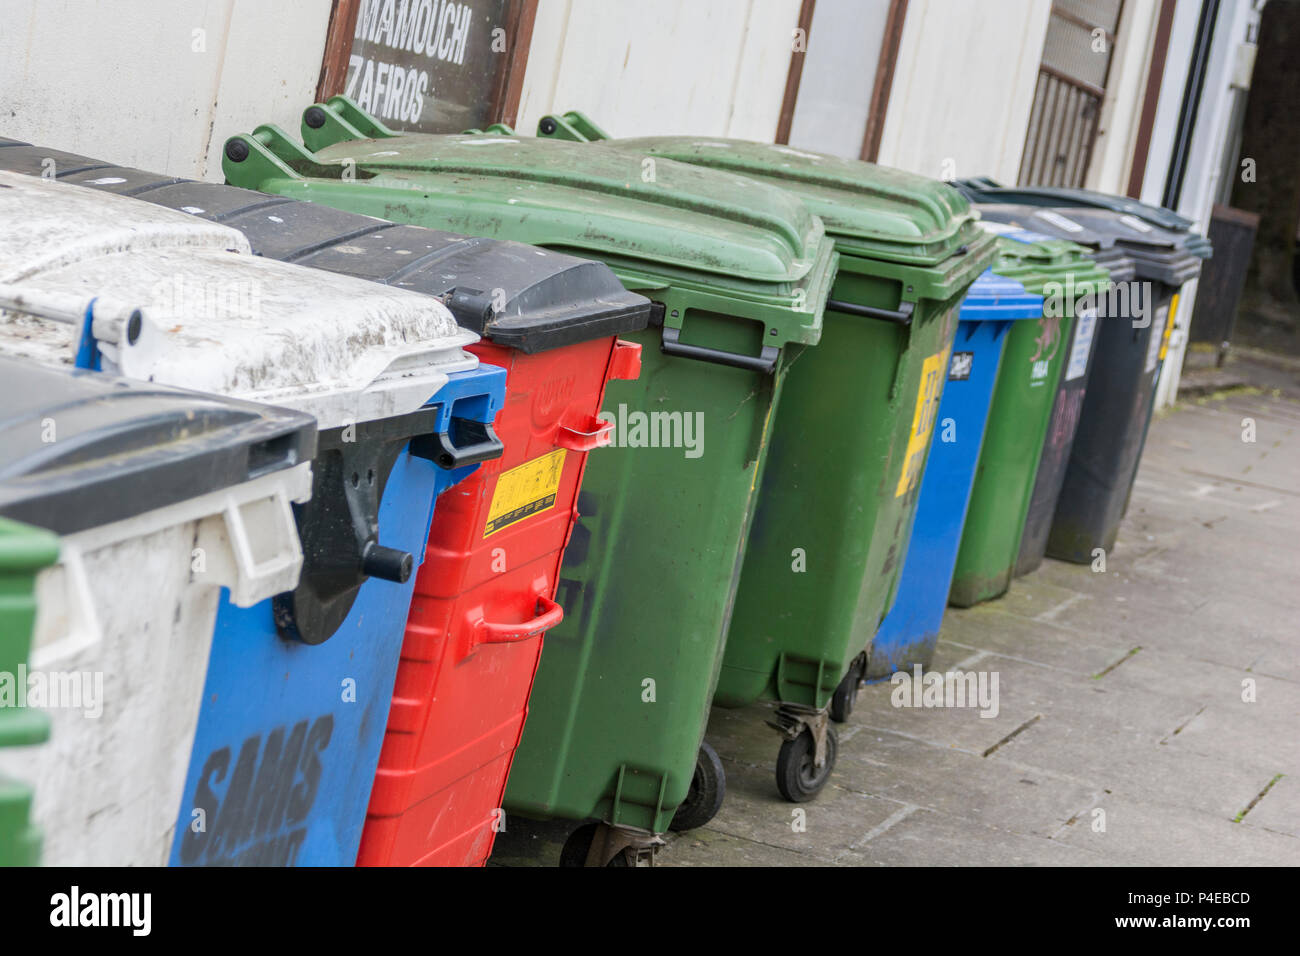 Collection of commercial wheelie bins / rubbish bins in Truro, Cornwall. Redundant data metaphor, commercial rubbish collection service. Stock Photo